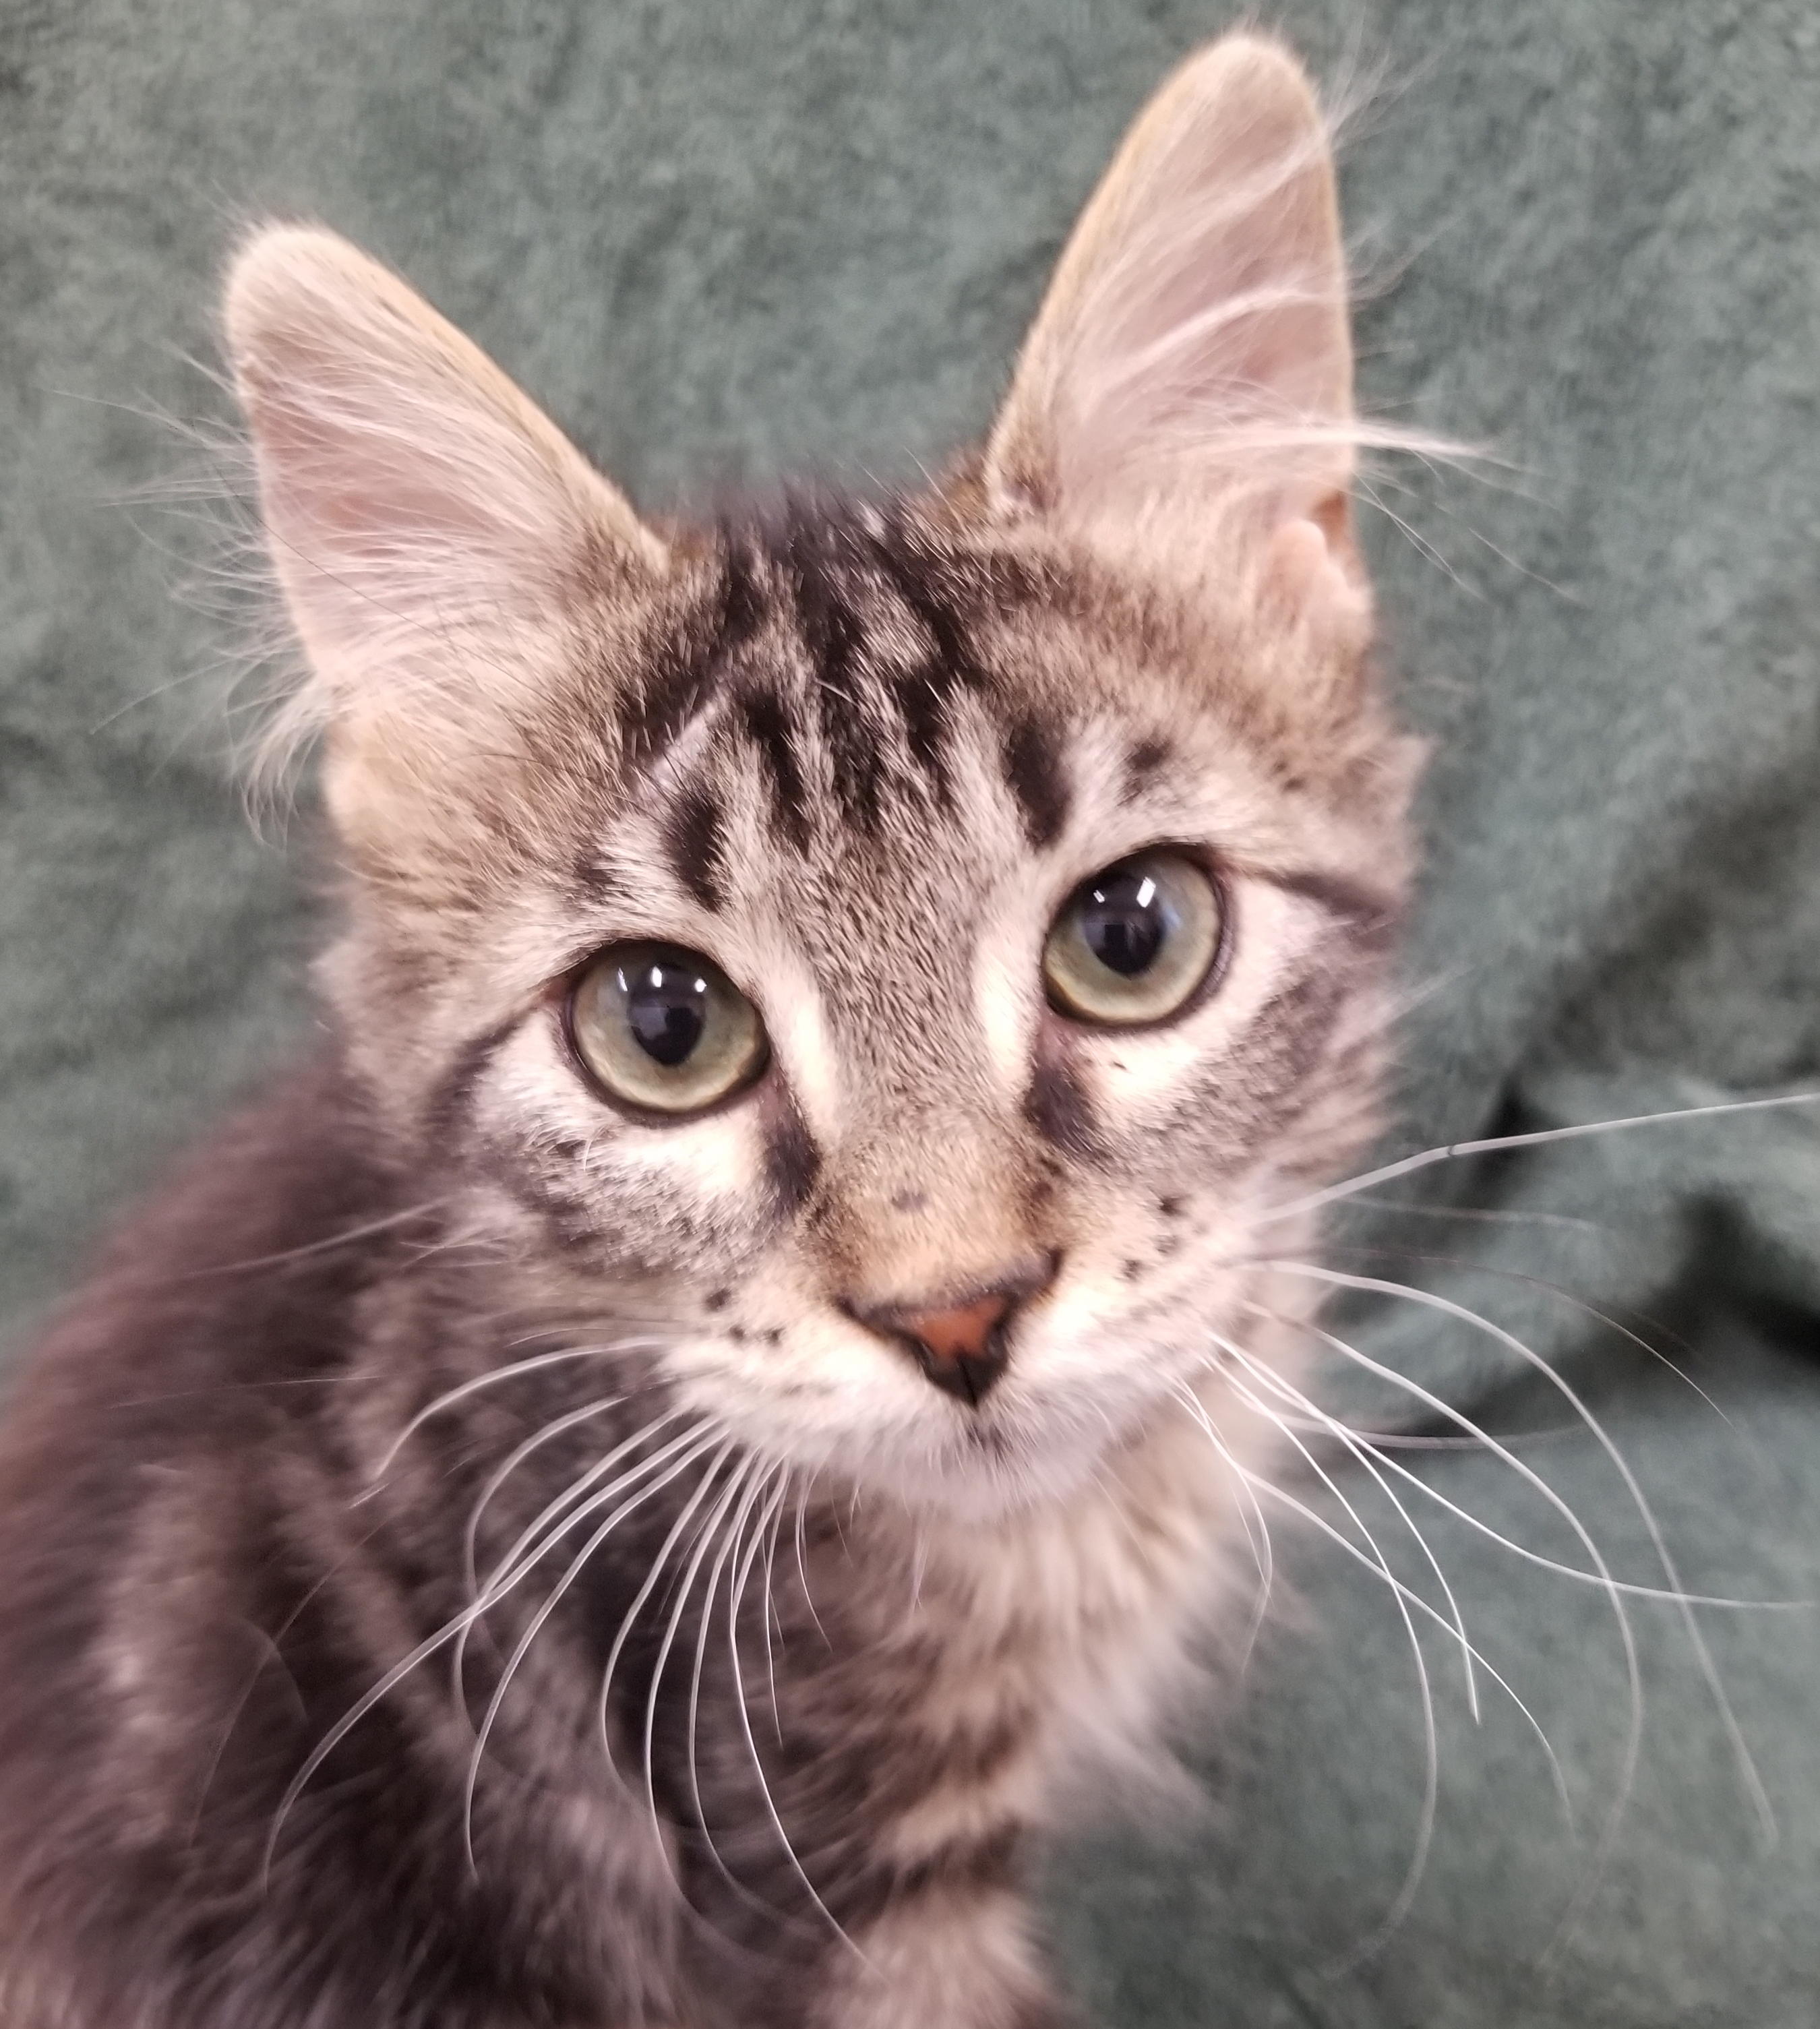 Sulphur Springs Animal Shelter Running $40 Adoption Fee Special on All Kittens at the Shelter